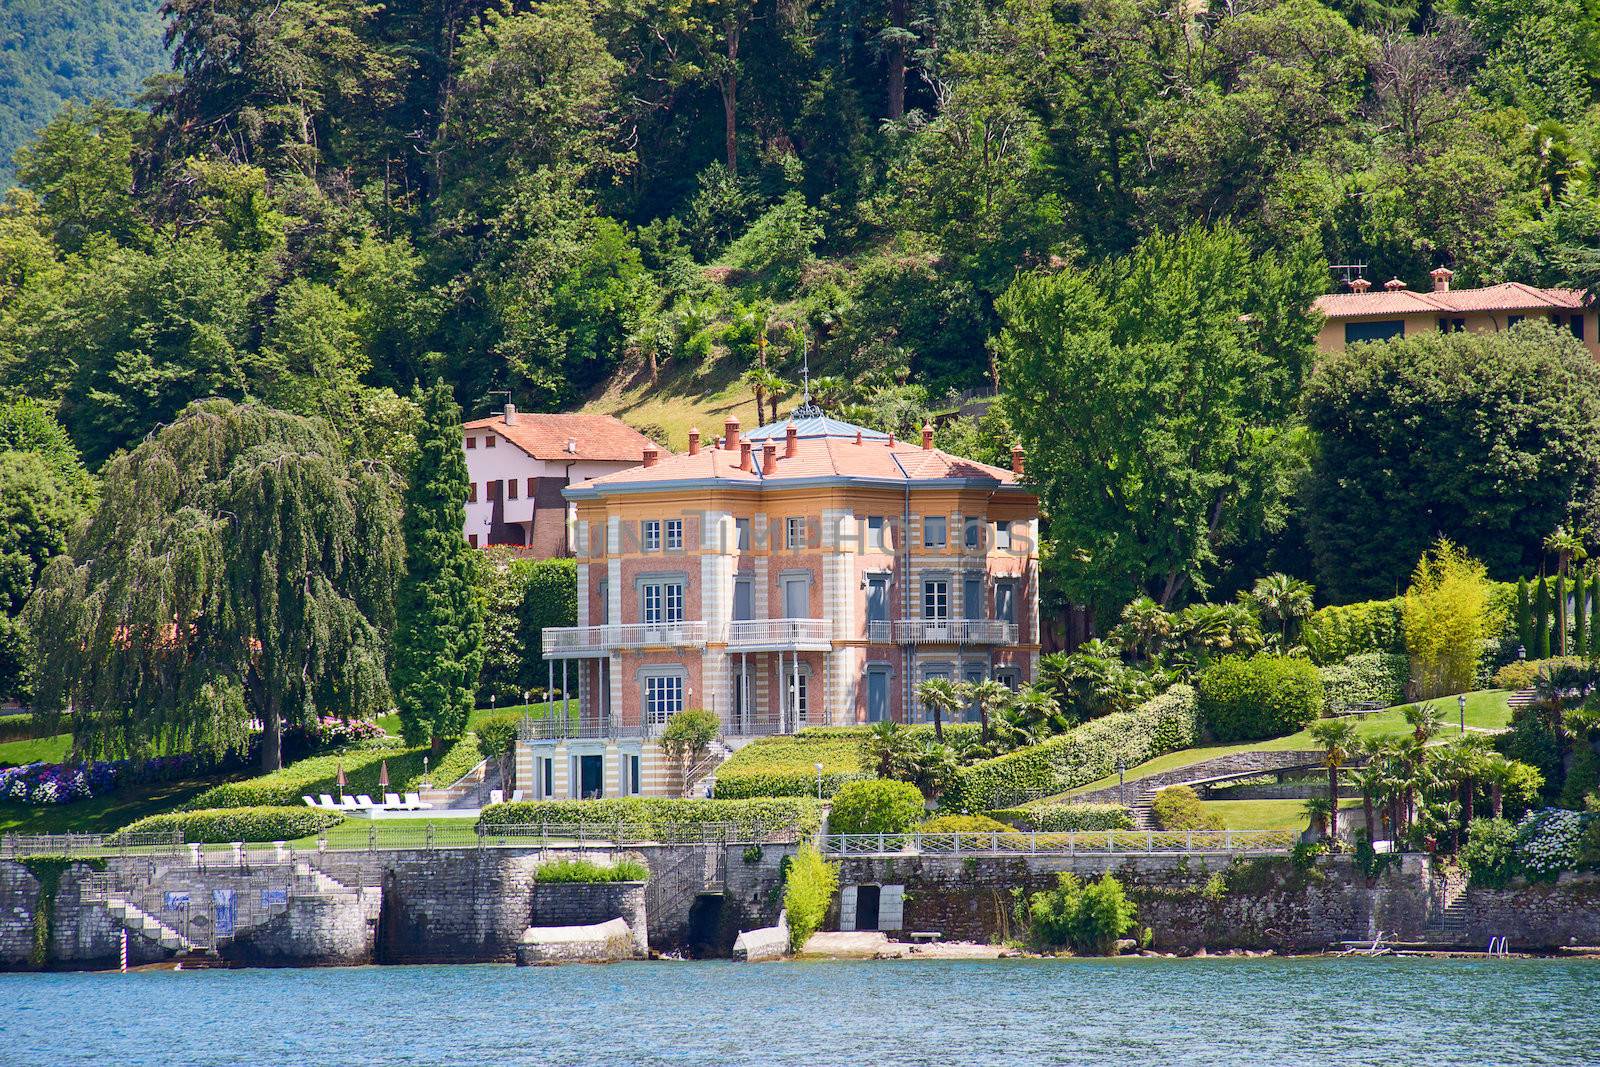 Lake Como by swisshippo